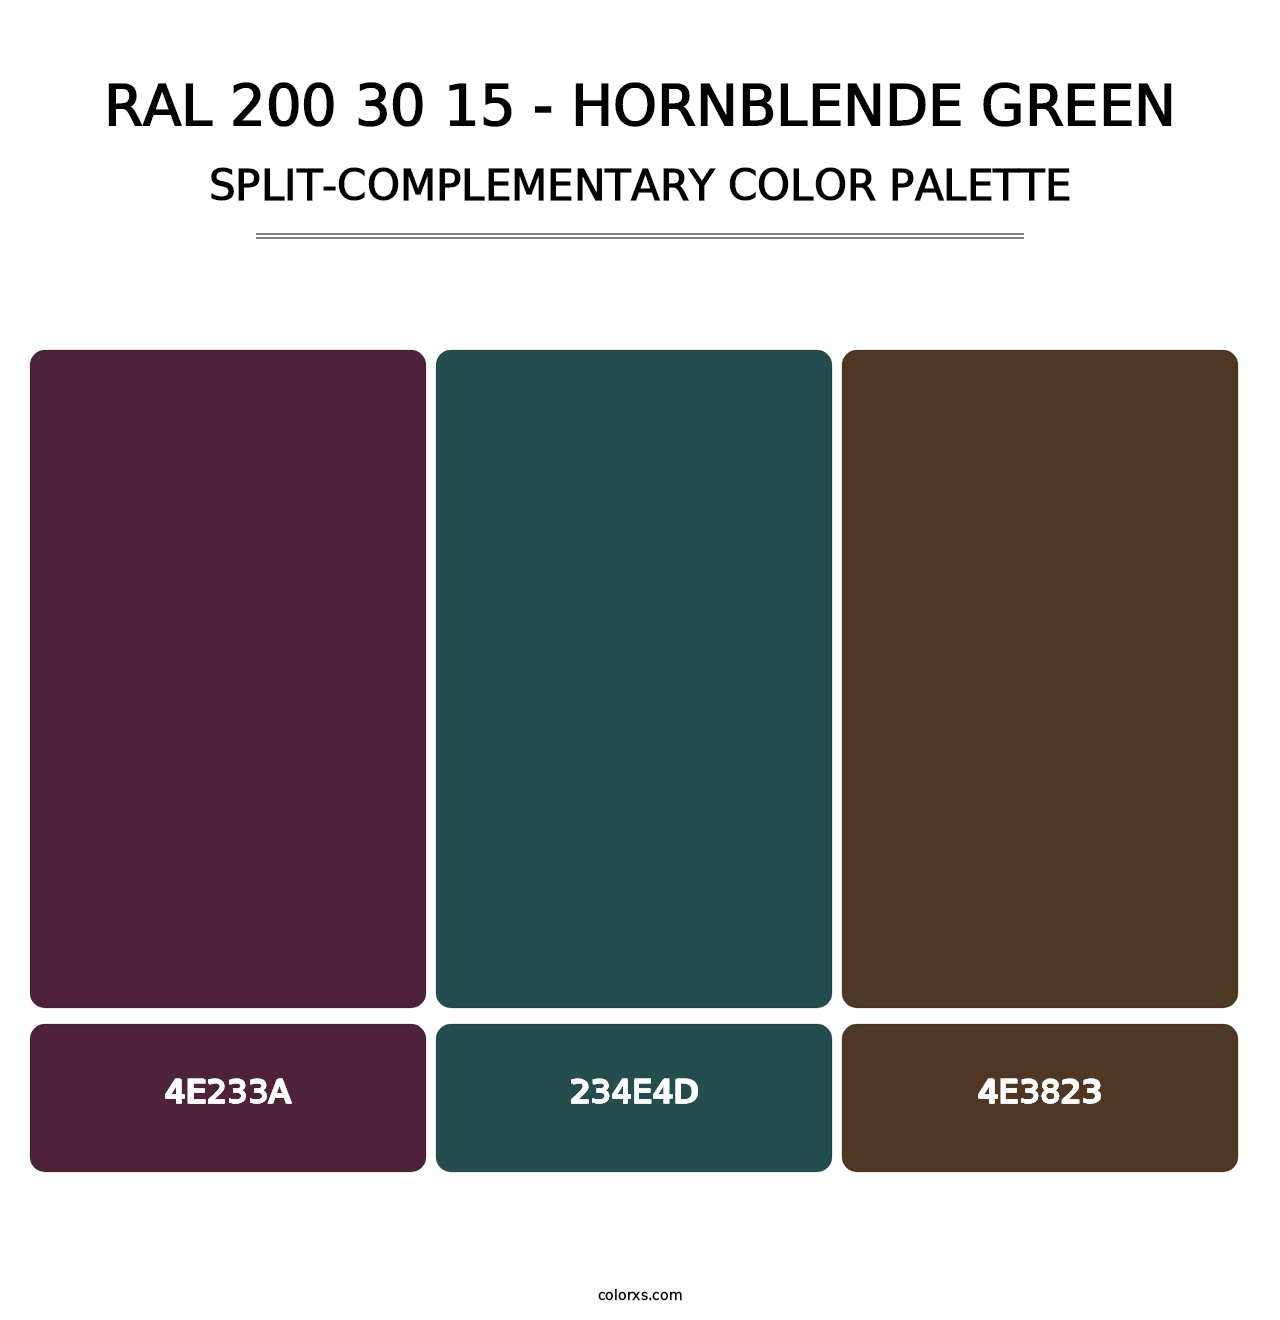 RAL 200 30 15 - Hornblende Green - Split-Complementary Color Palette